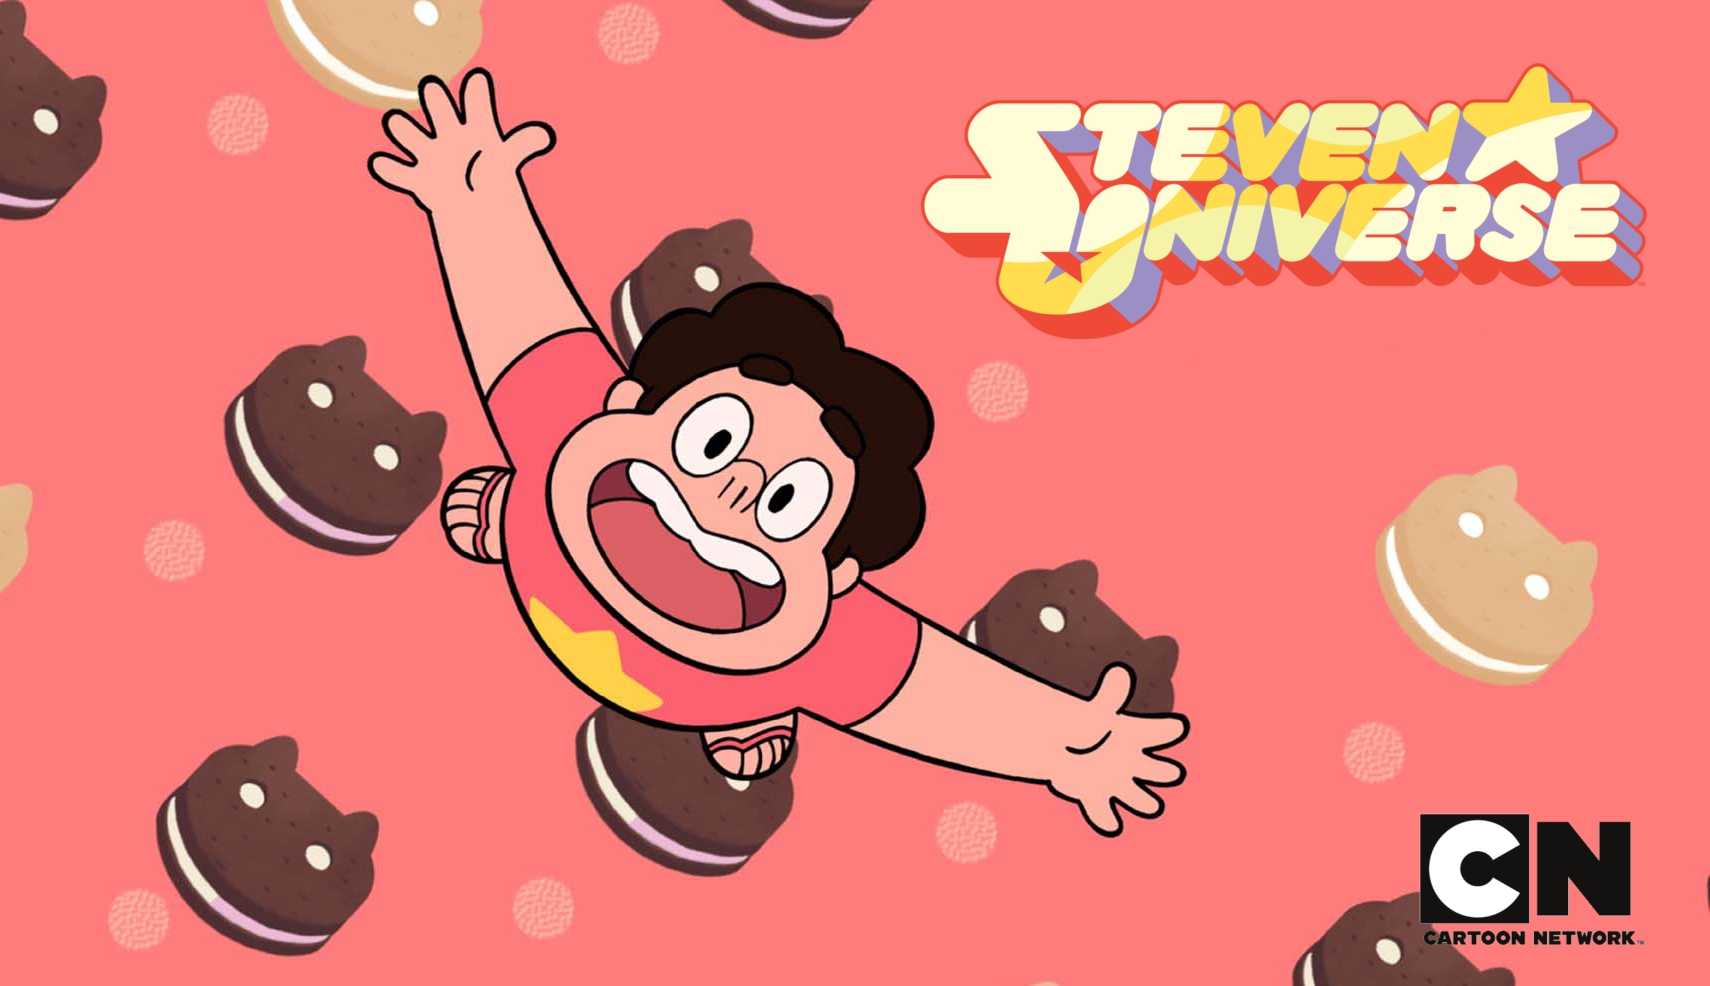 Steven Universe in esclusiva su Cartoon Network | Digitale terrestre: Dtti.it